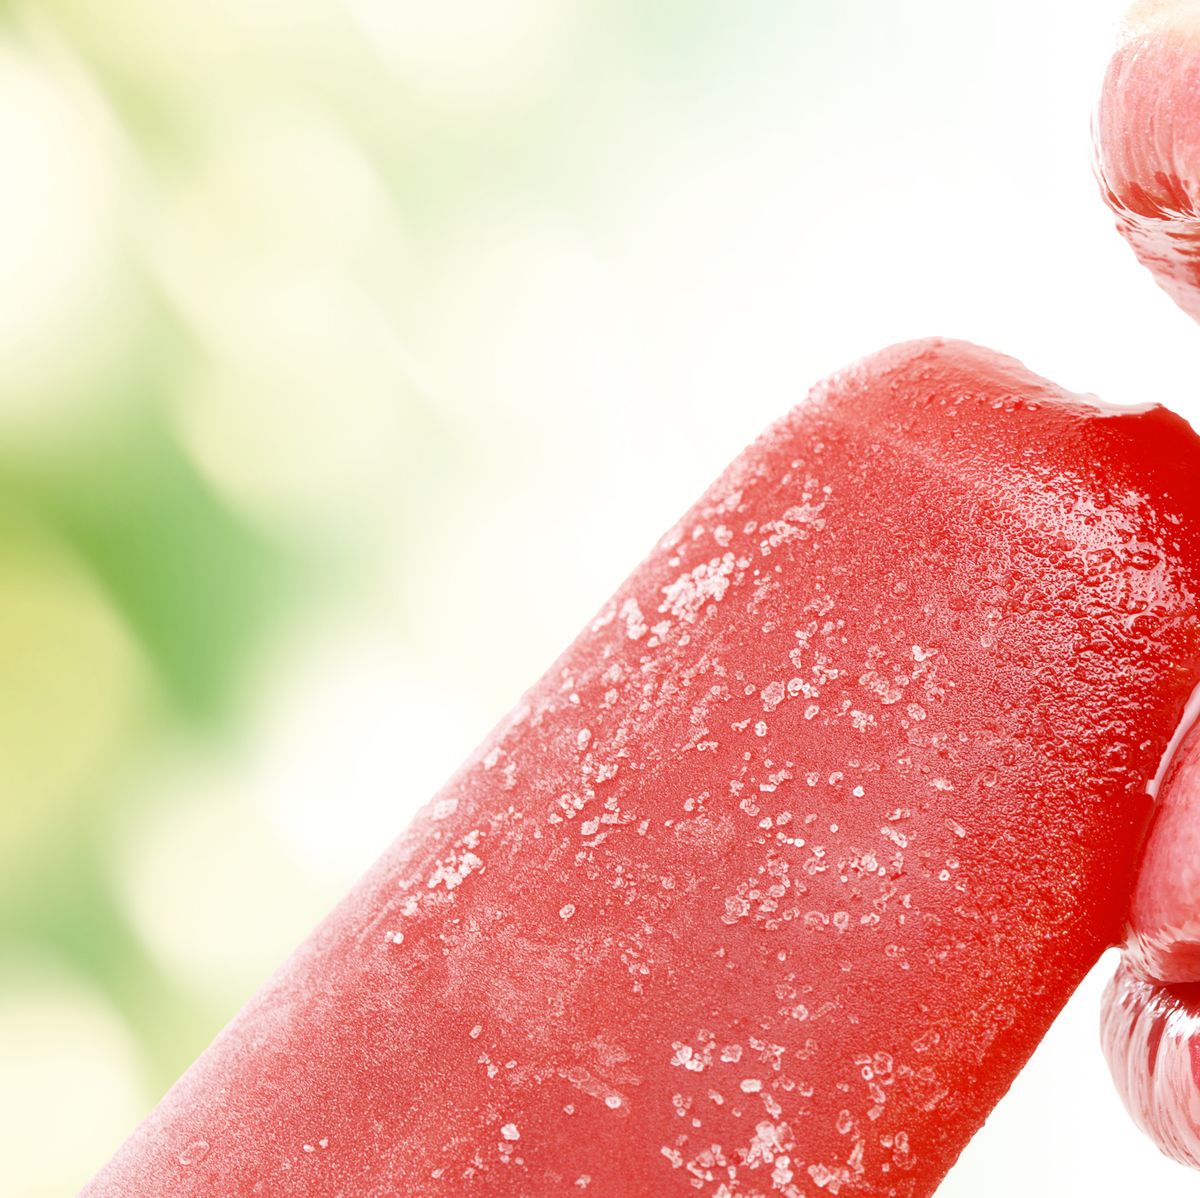 Tongue Piercing Infection - Tongue Piercing FAQ